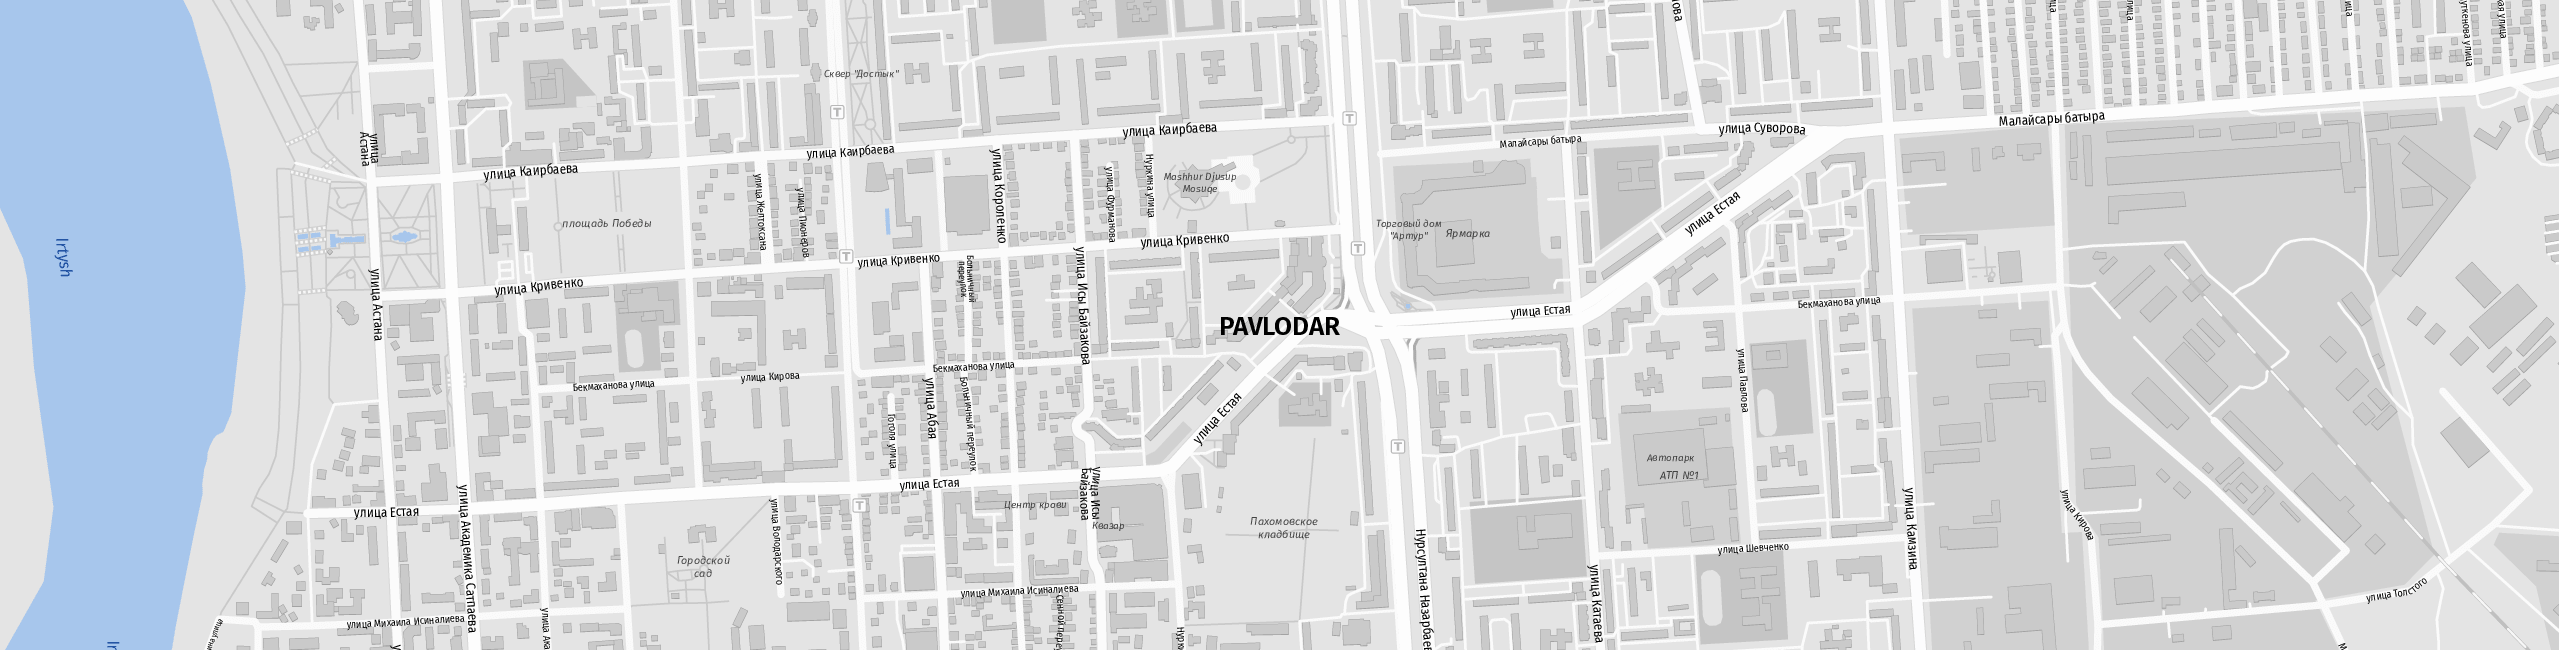 Stadtplan Pavlodar zum Downloaden.